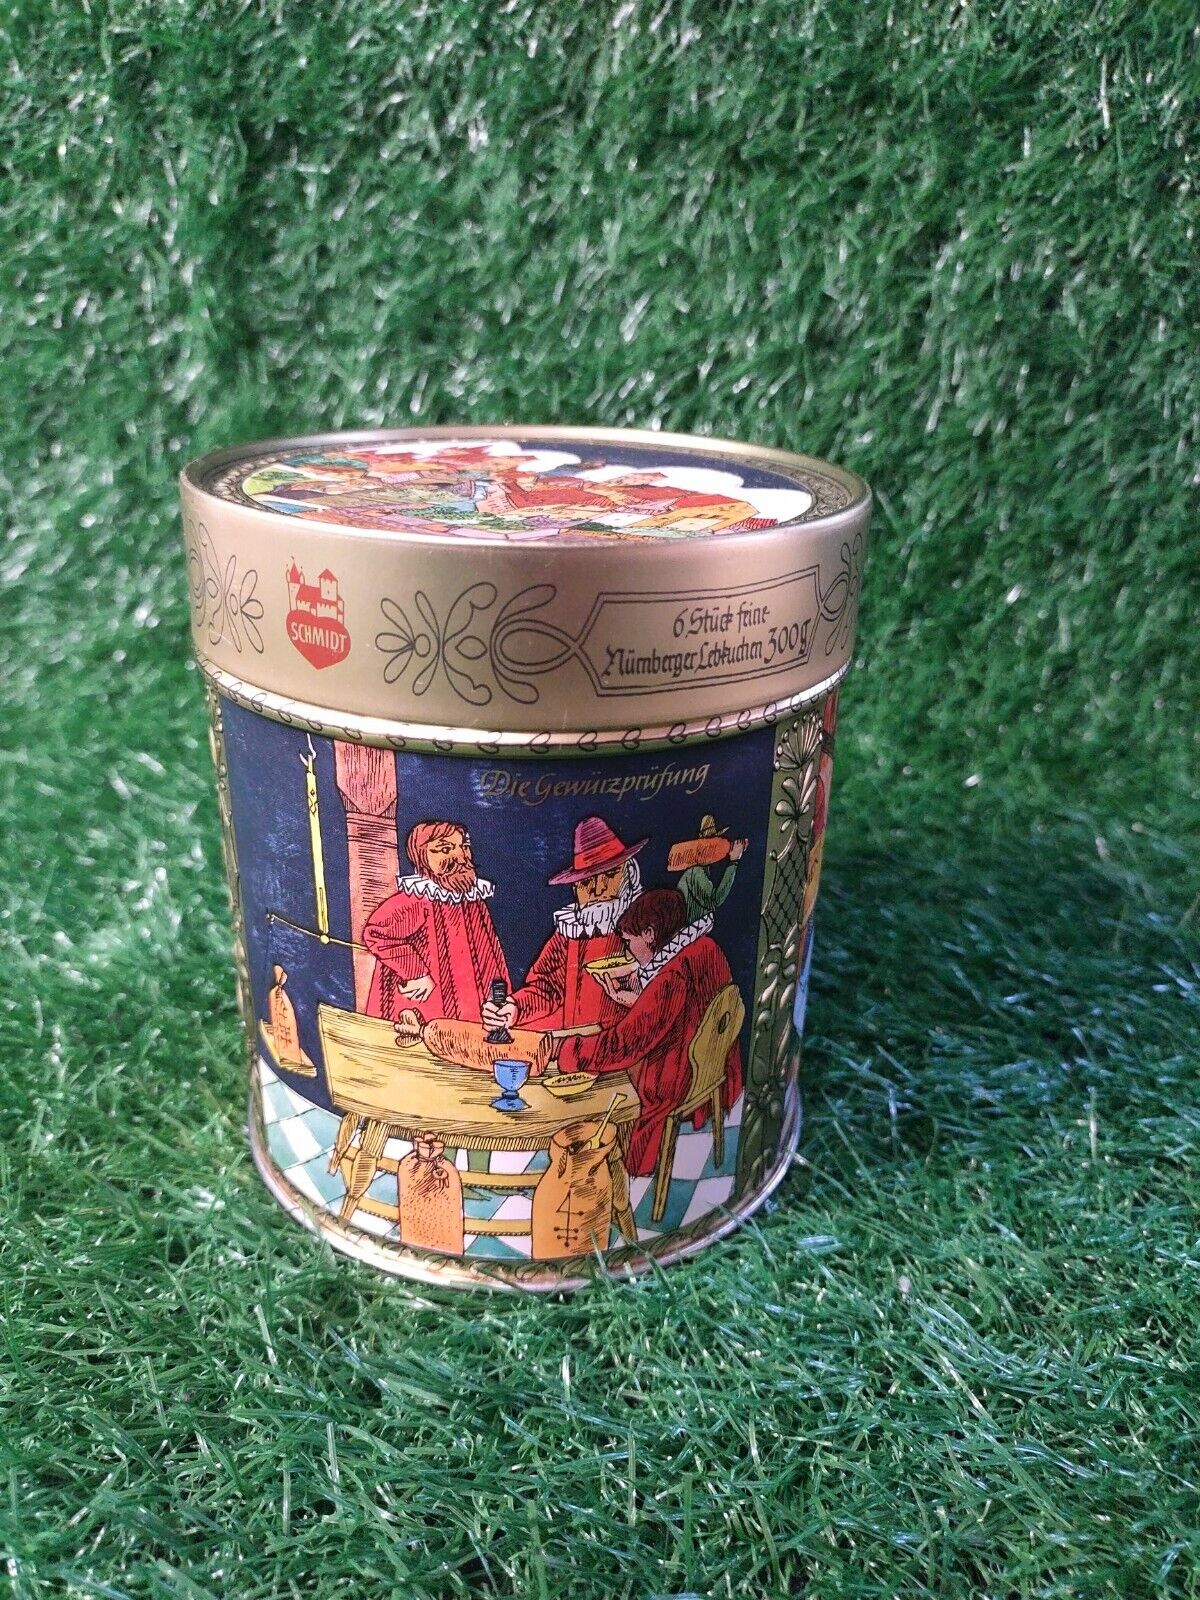 Vintage Souvenir Tin Can, Nuremberg, Schmidt 